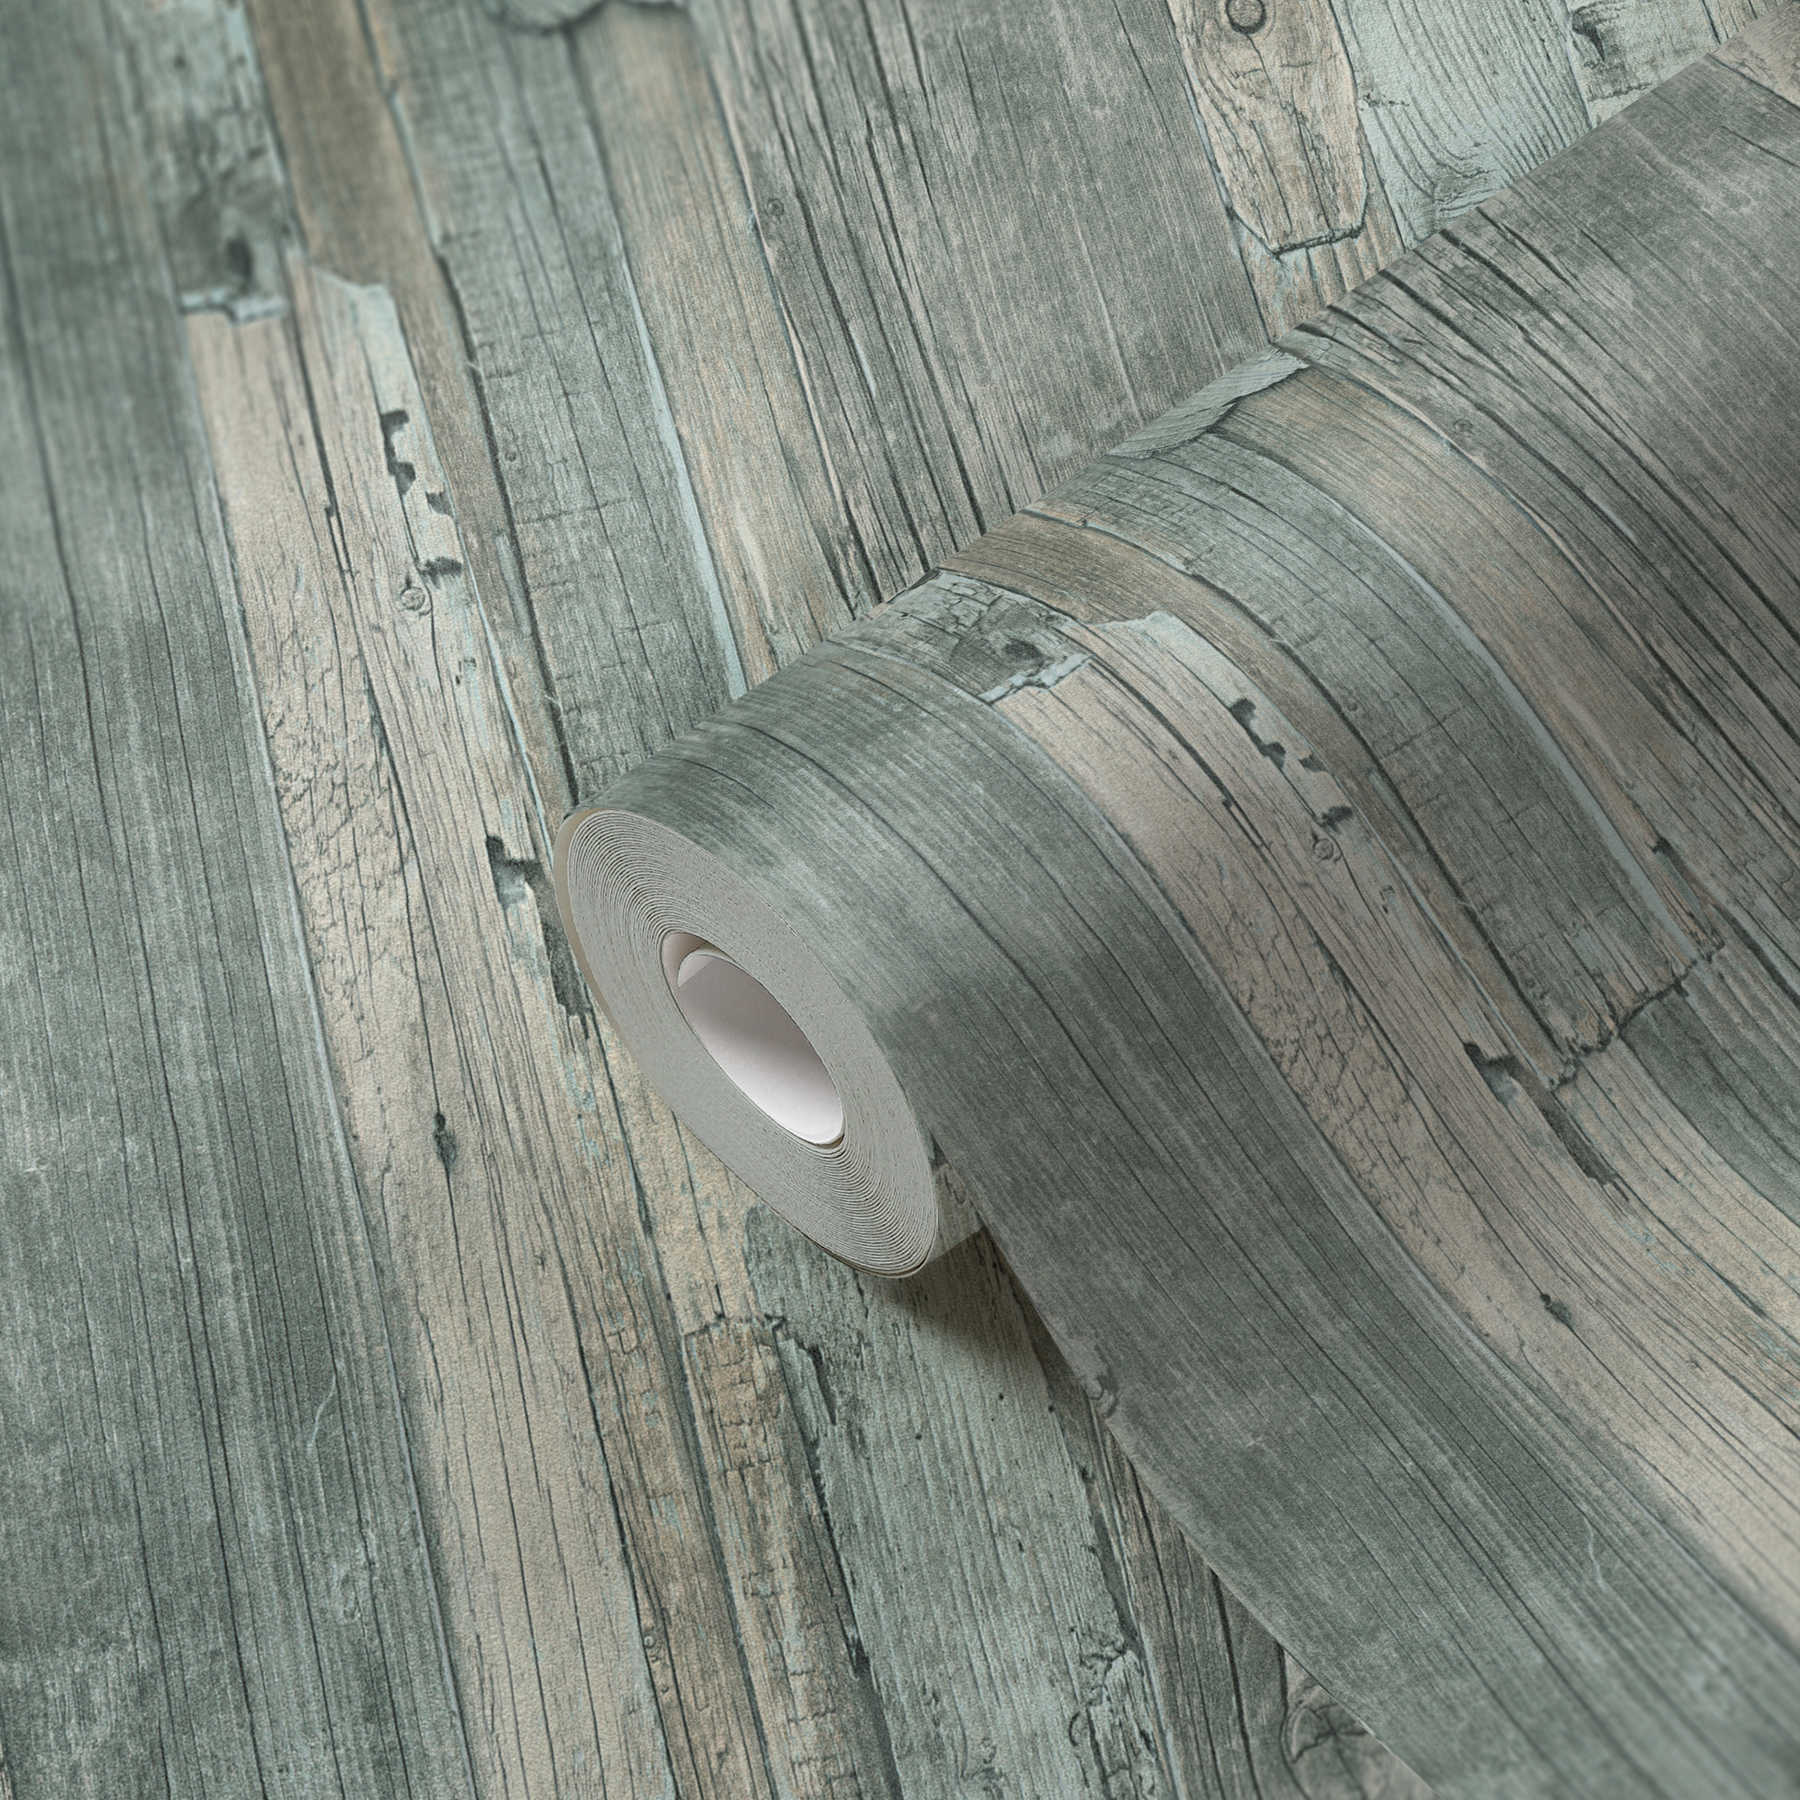             Beach Wood vliesbehang houtlook in Shabby Chic stijl - groen
        